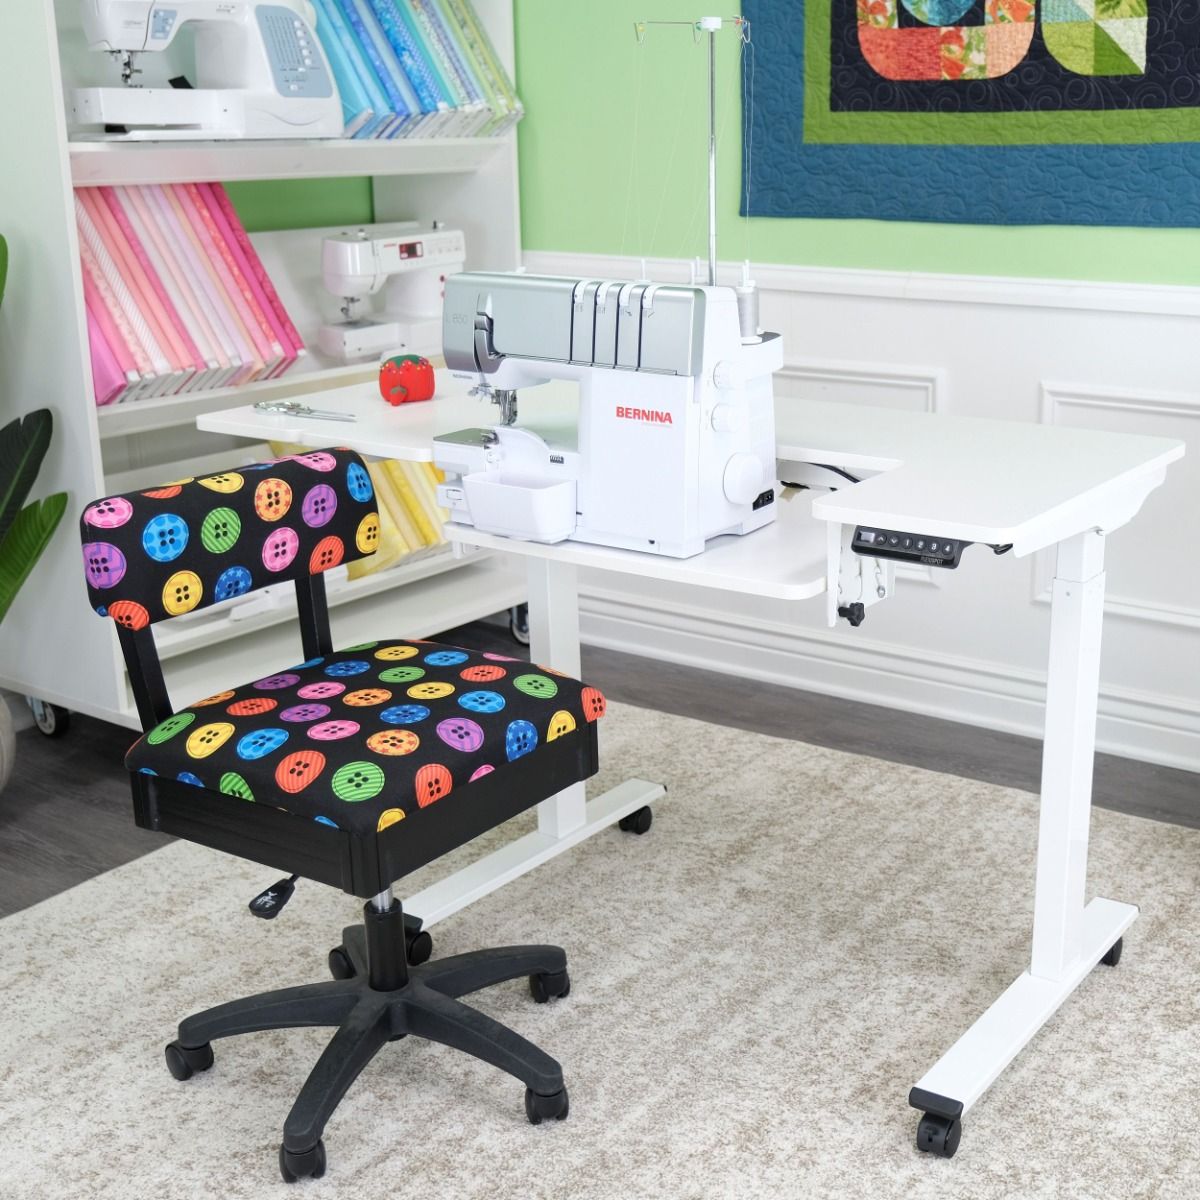 Arrow Gidget II Indoor Sewing Machine Craft Table - White